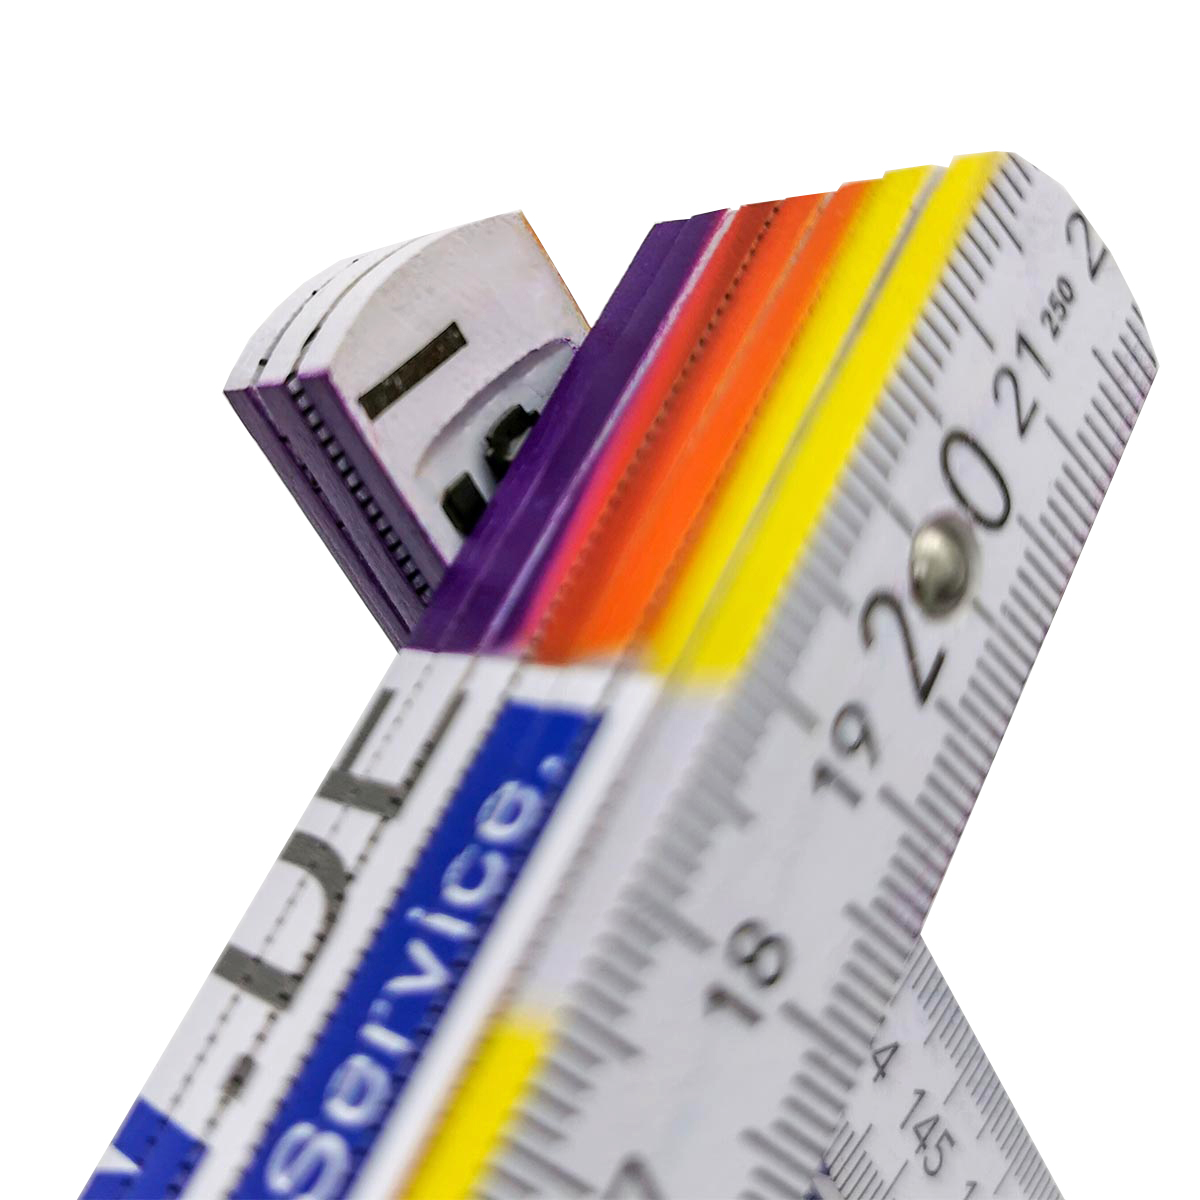 ADGA 250 plus weiß - 2m Zollstock Meterstab Gliedermaßstab mit Druck Fotodruck 4-farbig